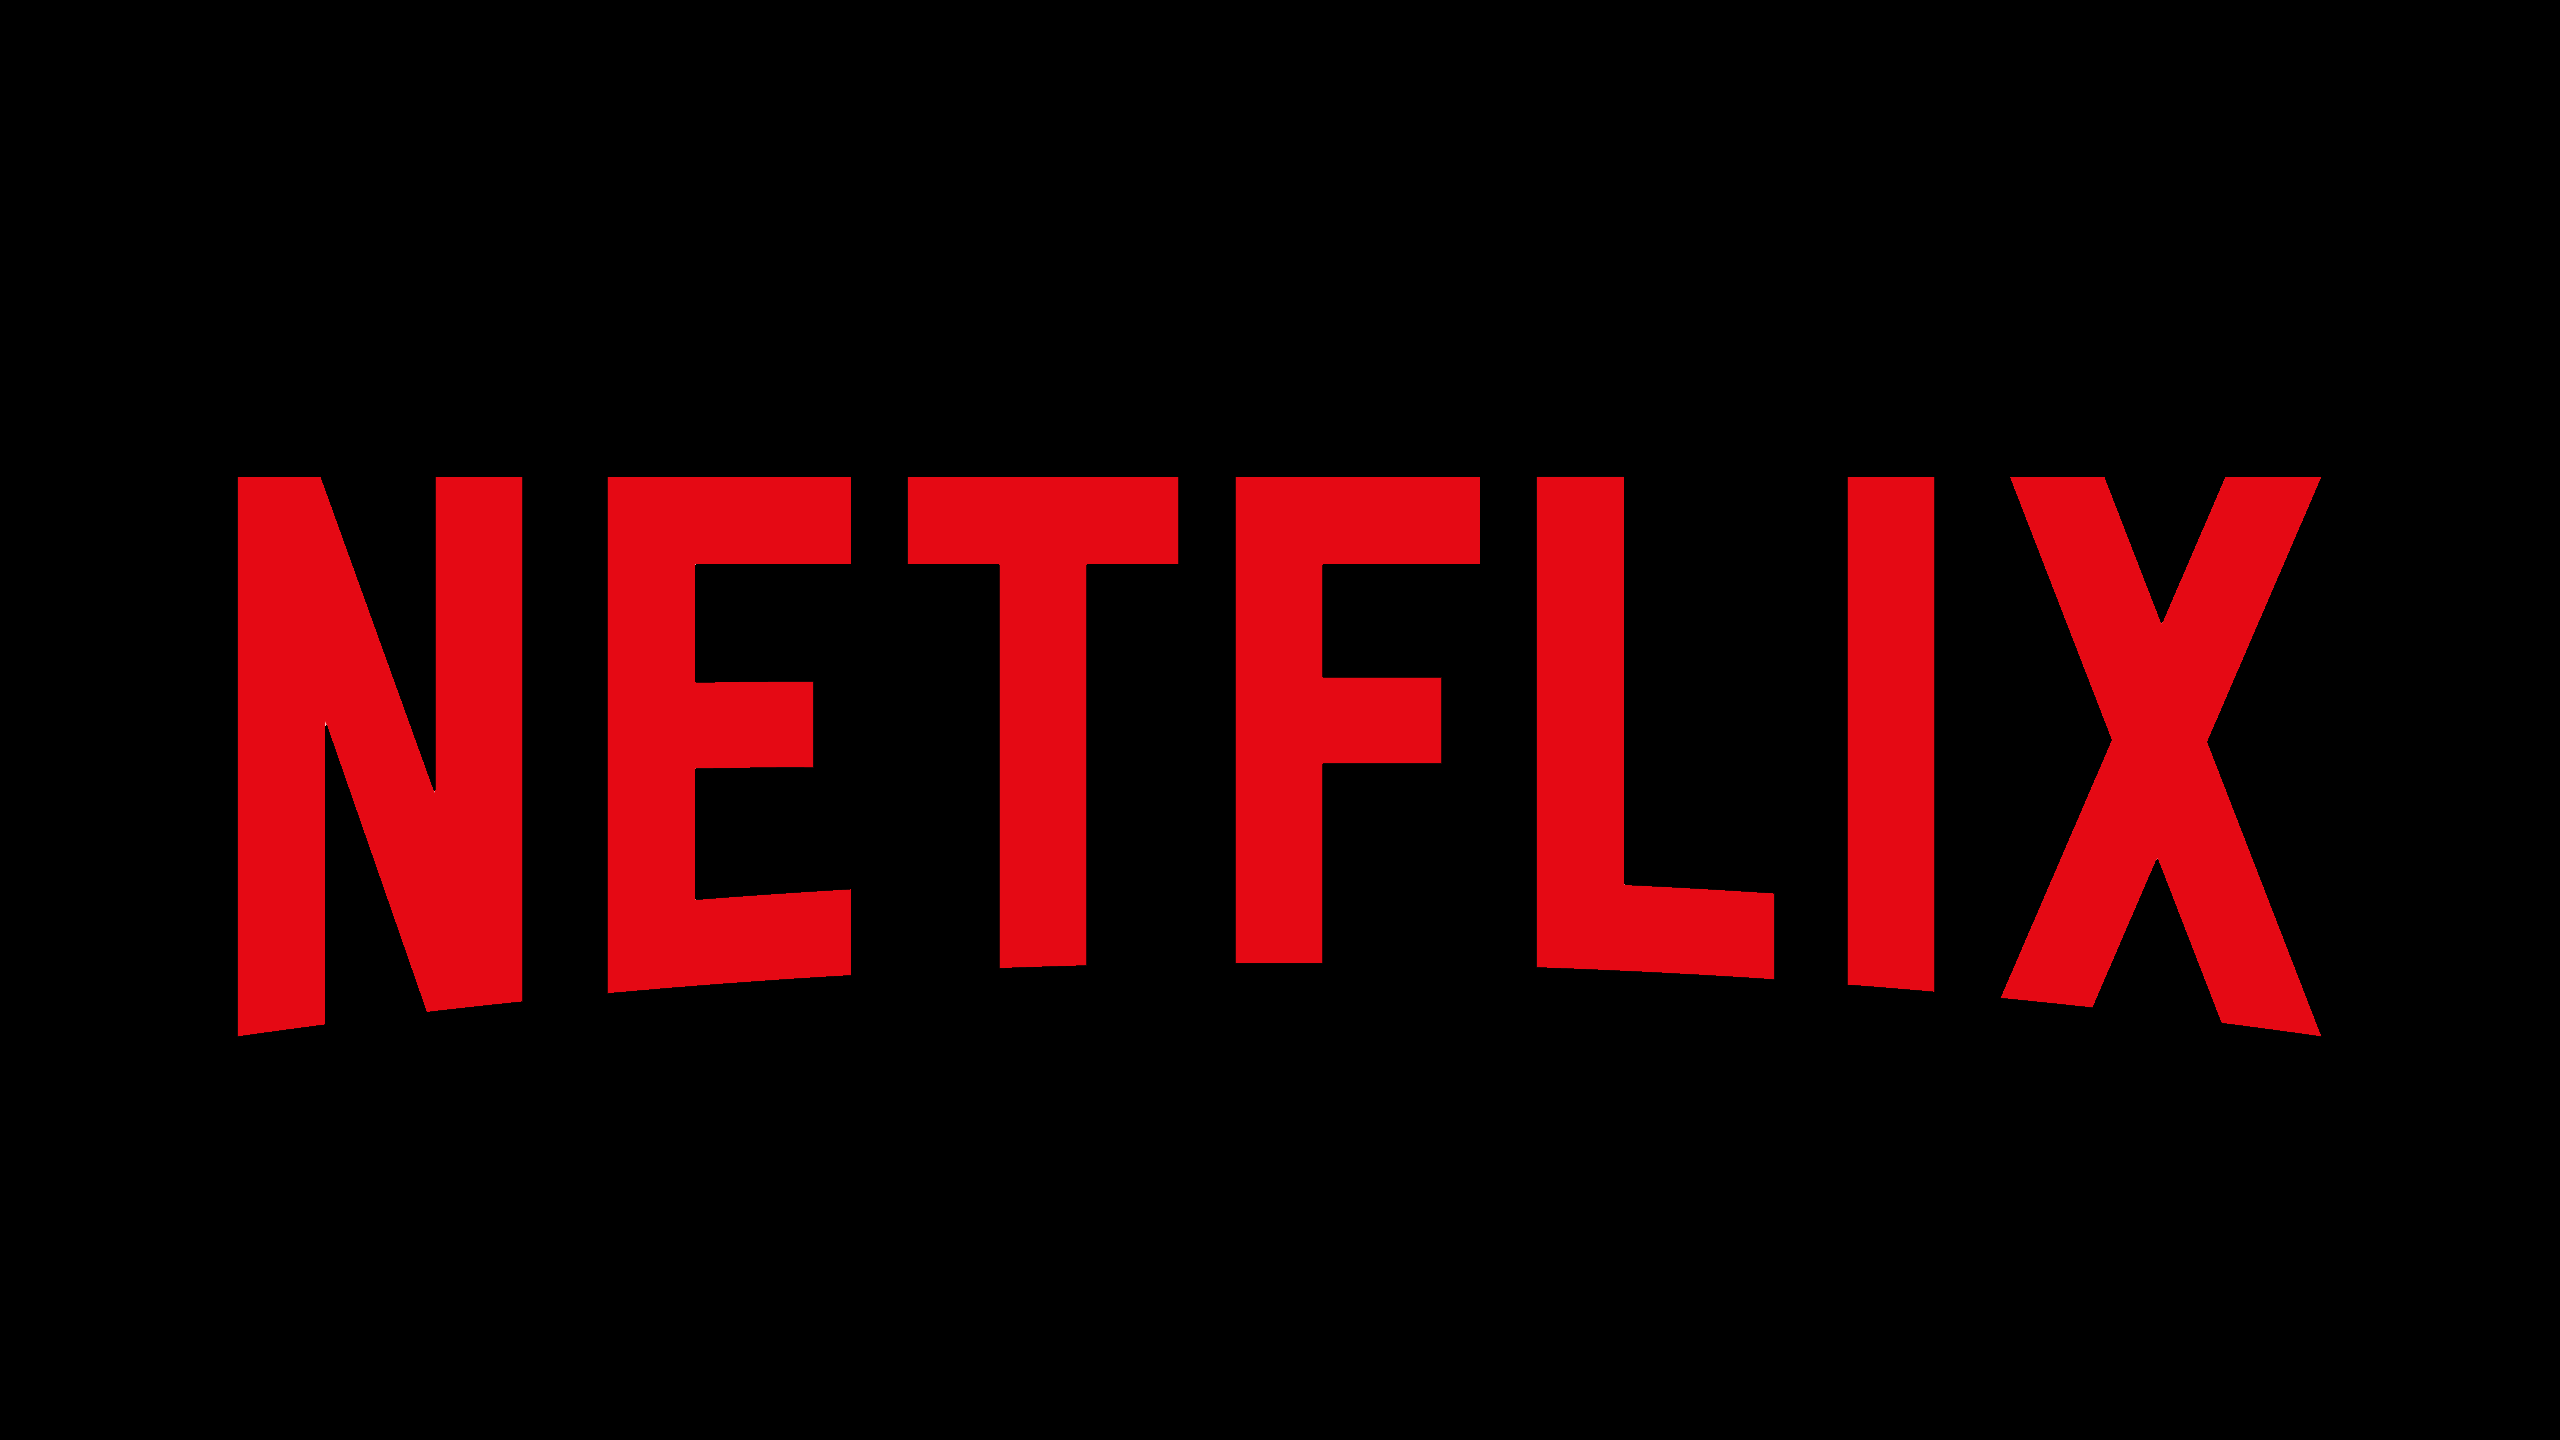 No Net Neutrality: Netflix Loses Lawsuit on Bandwidth Fee against Internet Service Provider